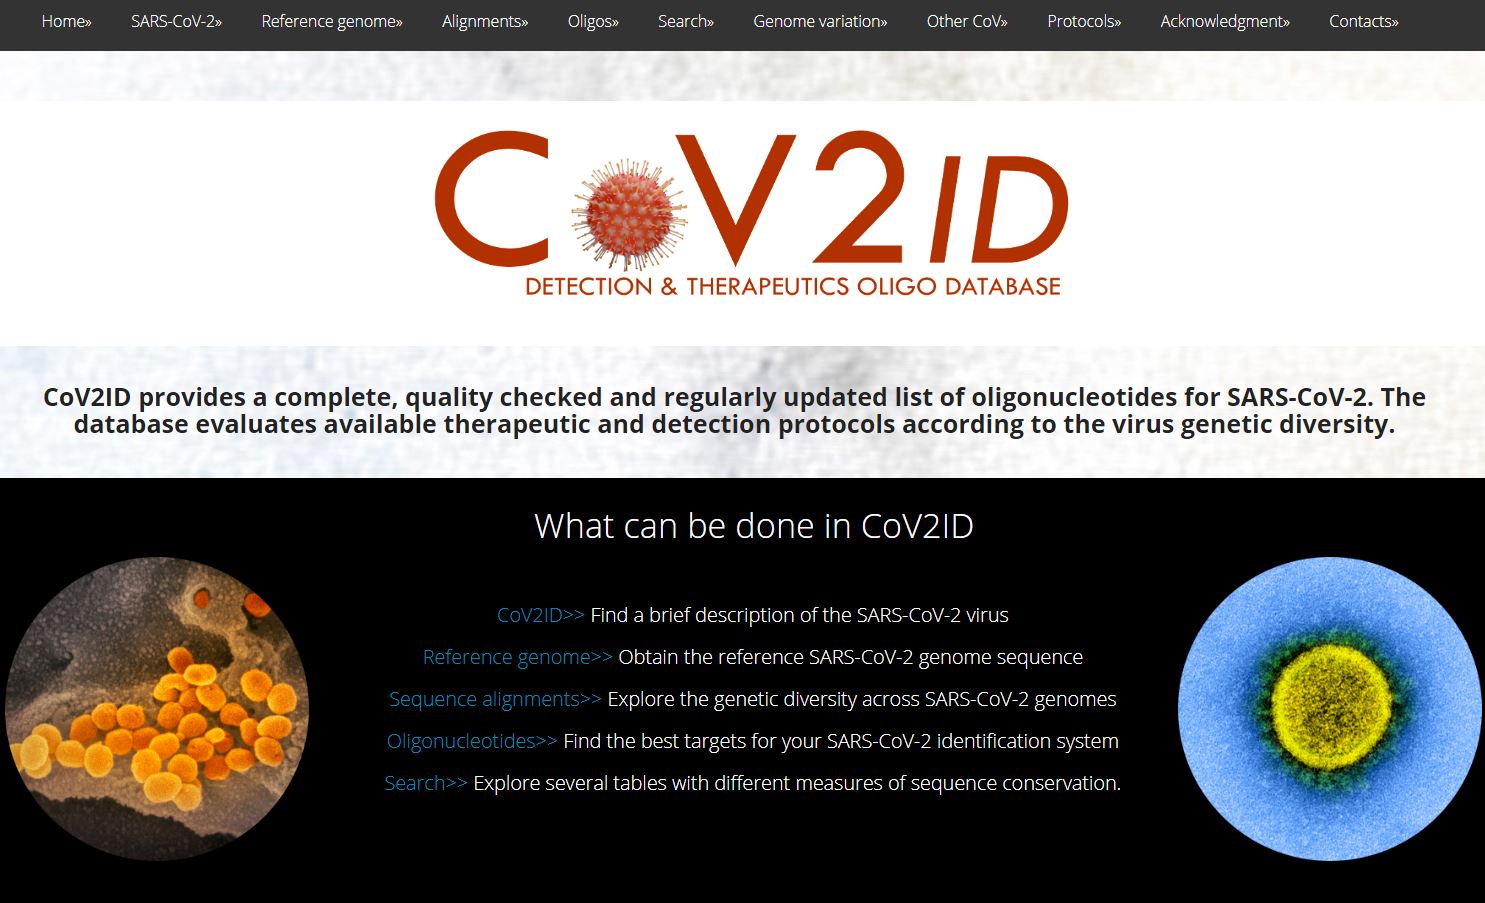 CoV2ID: Detection and Therapeutics Oligo Database for SARS-CoV-2